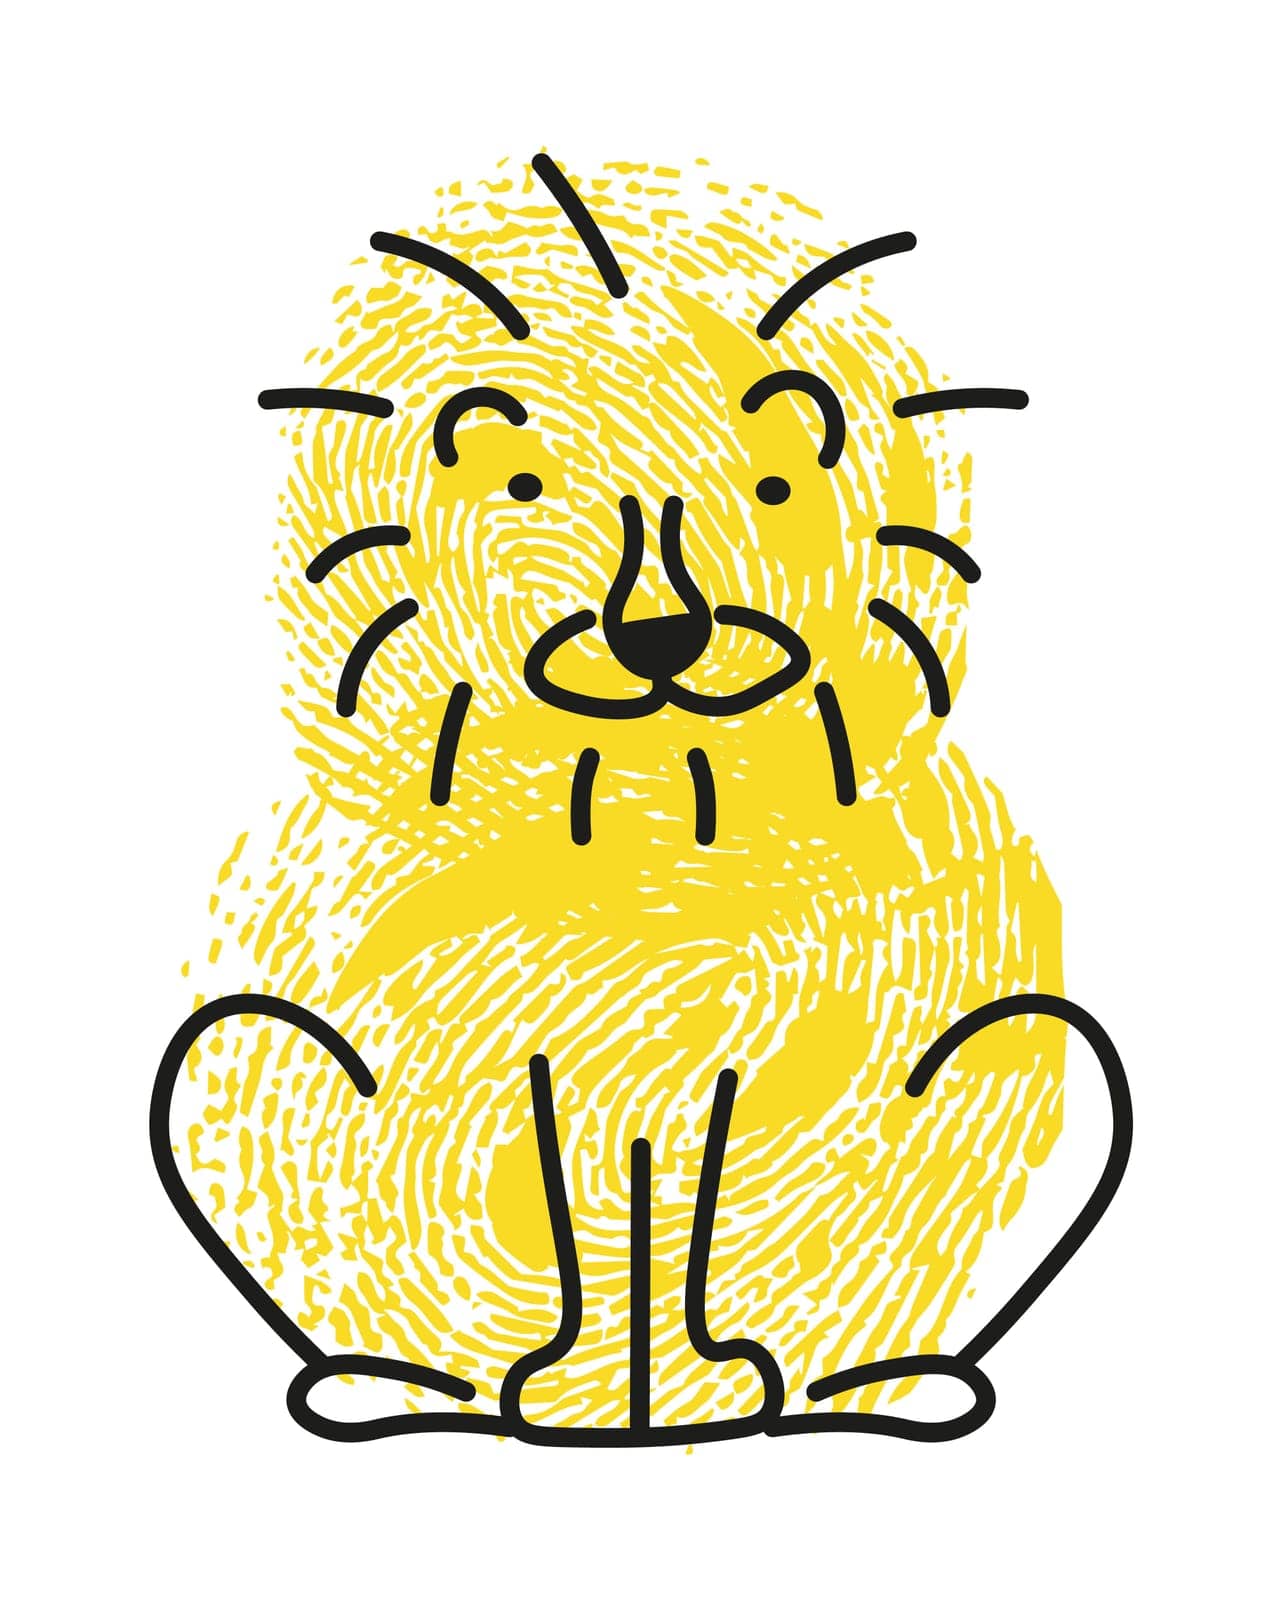 Thumbprint drawing of lion feline animal portrait by Sonulkaster